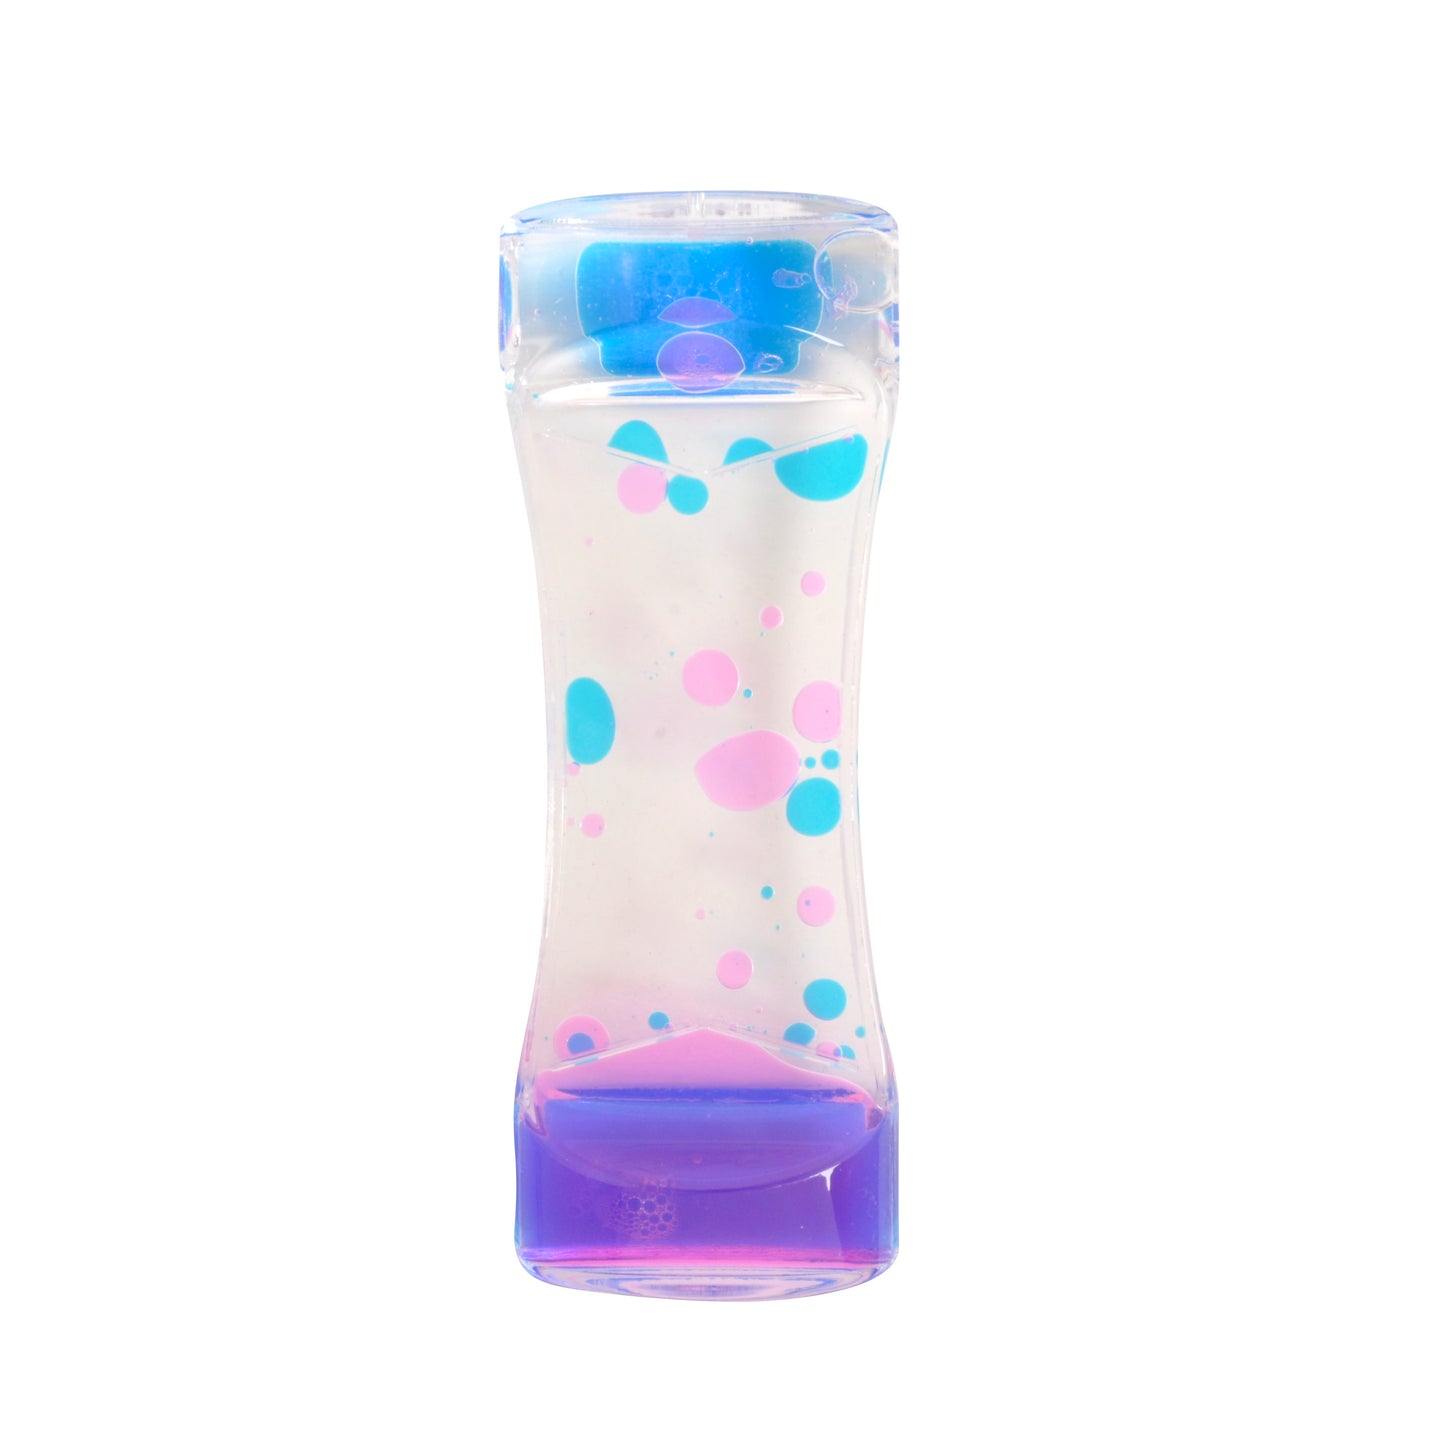 KaiserKids Sensory Water Toy - BLUE/PINK